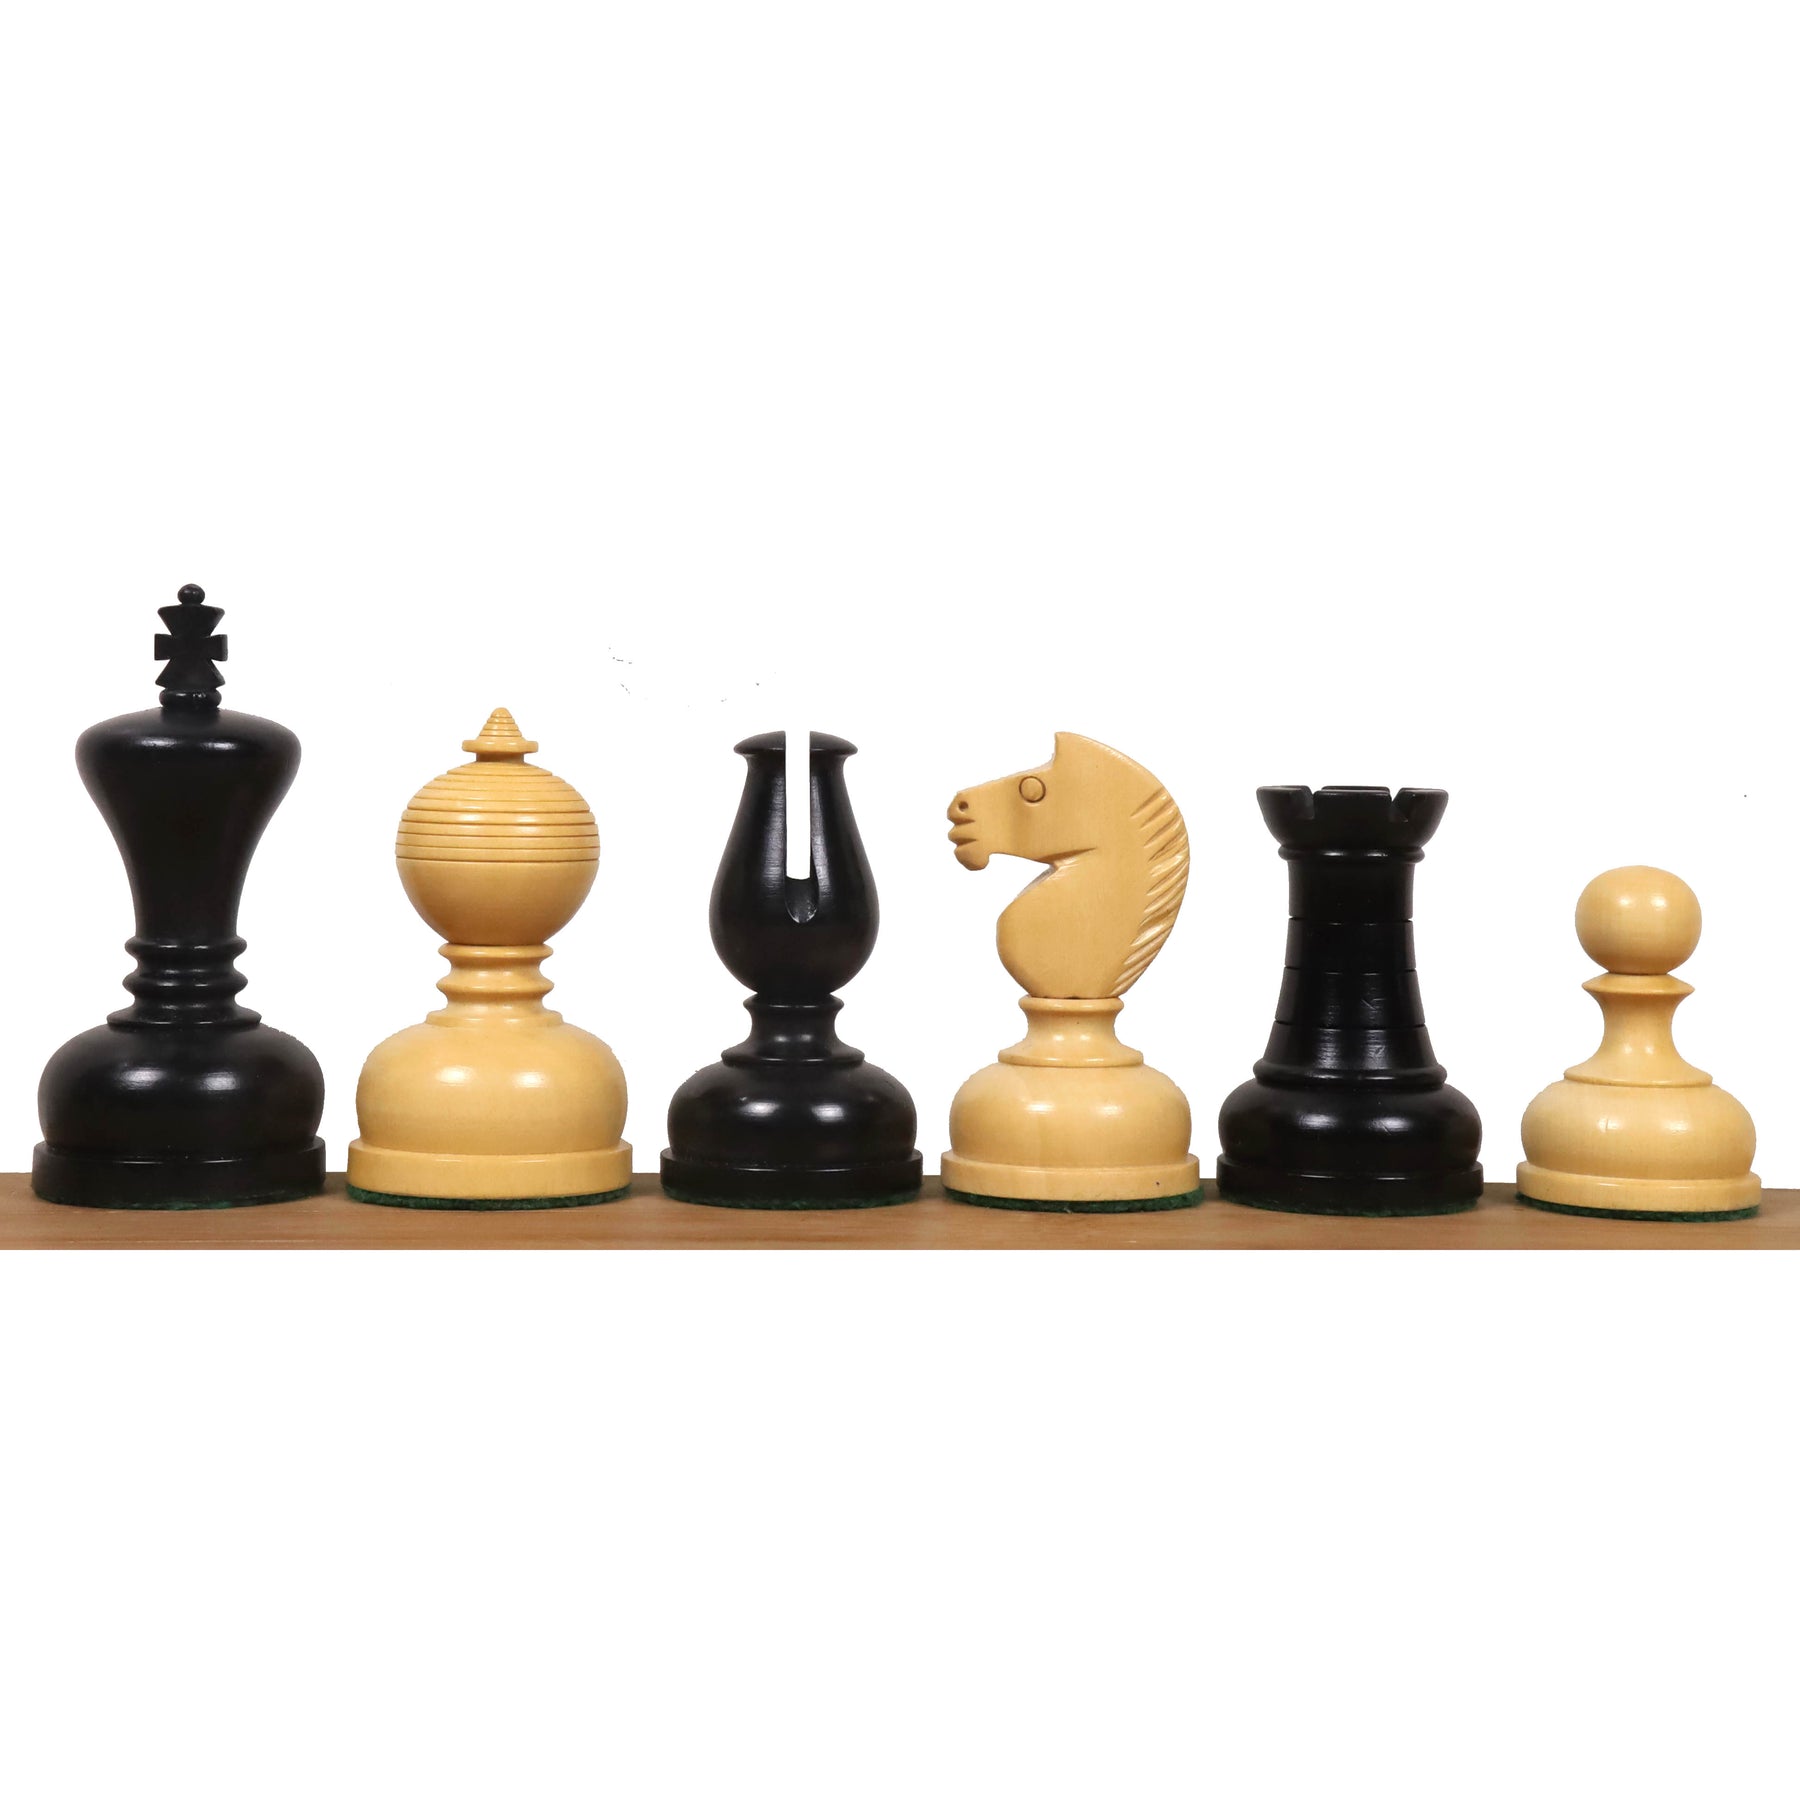 Trademark Global Tg Wooden Book Style Chess Board W/ Staunton